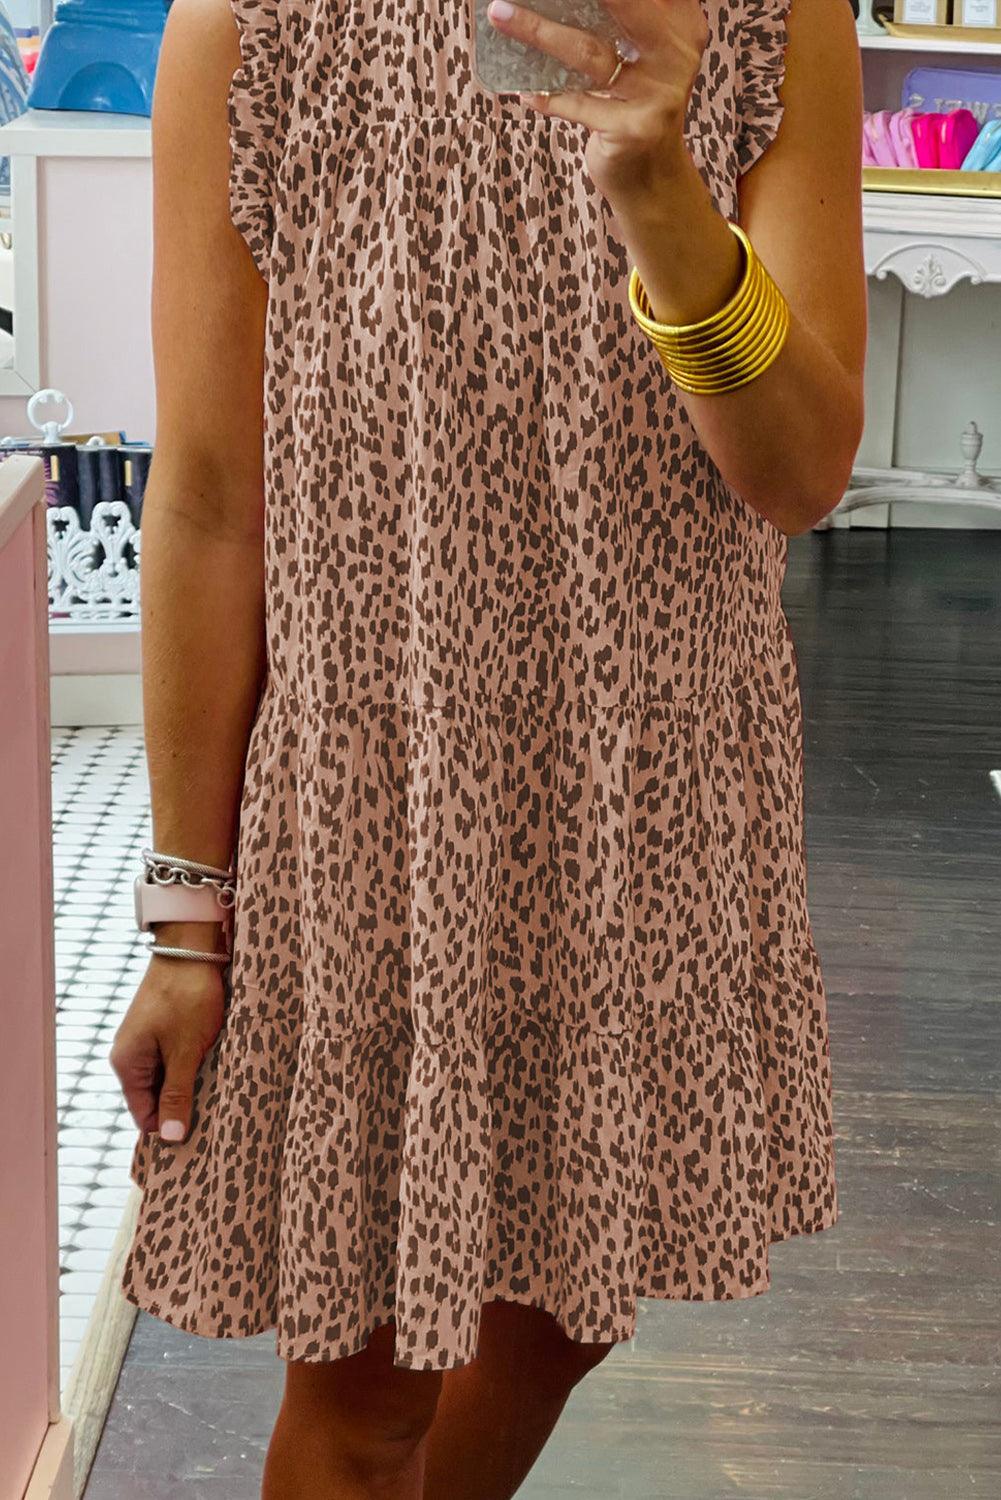 Pink Leopard Ruffled Tiered Sleeveless Mini Dress